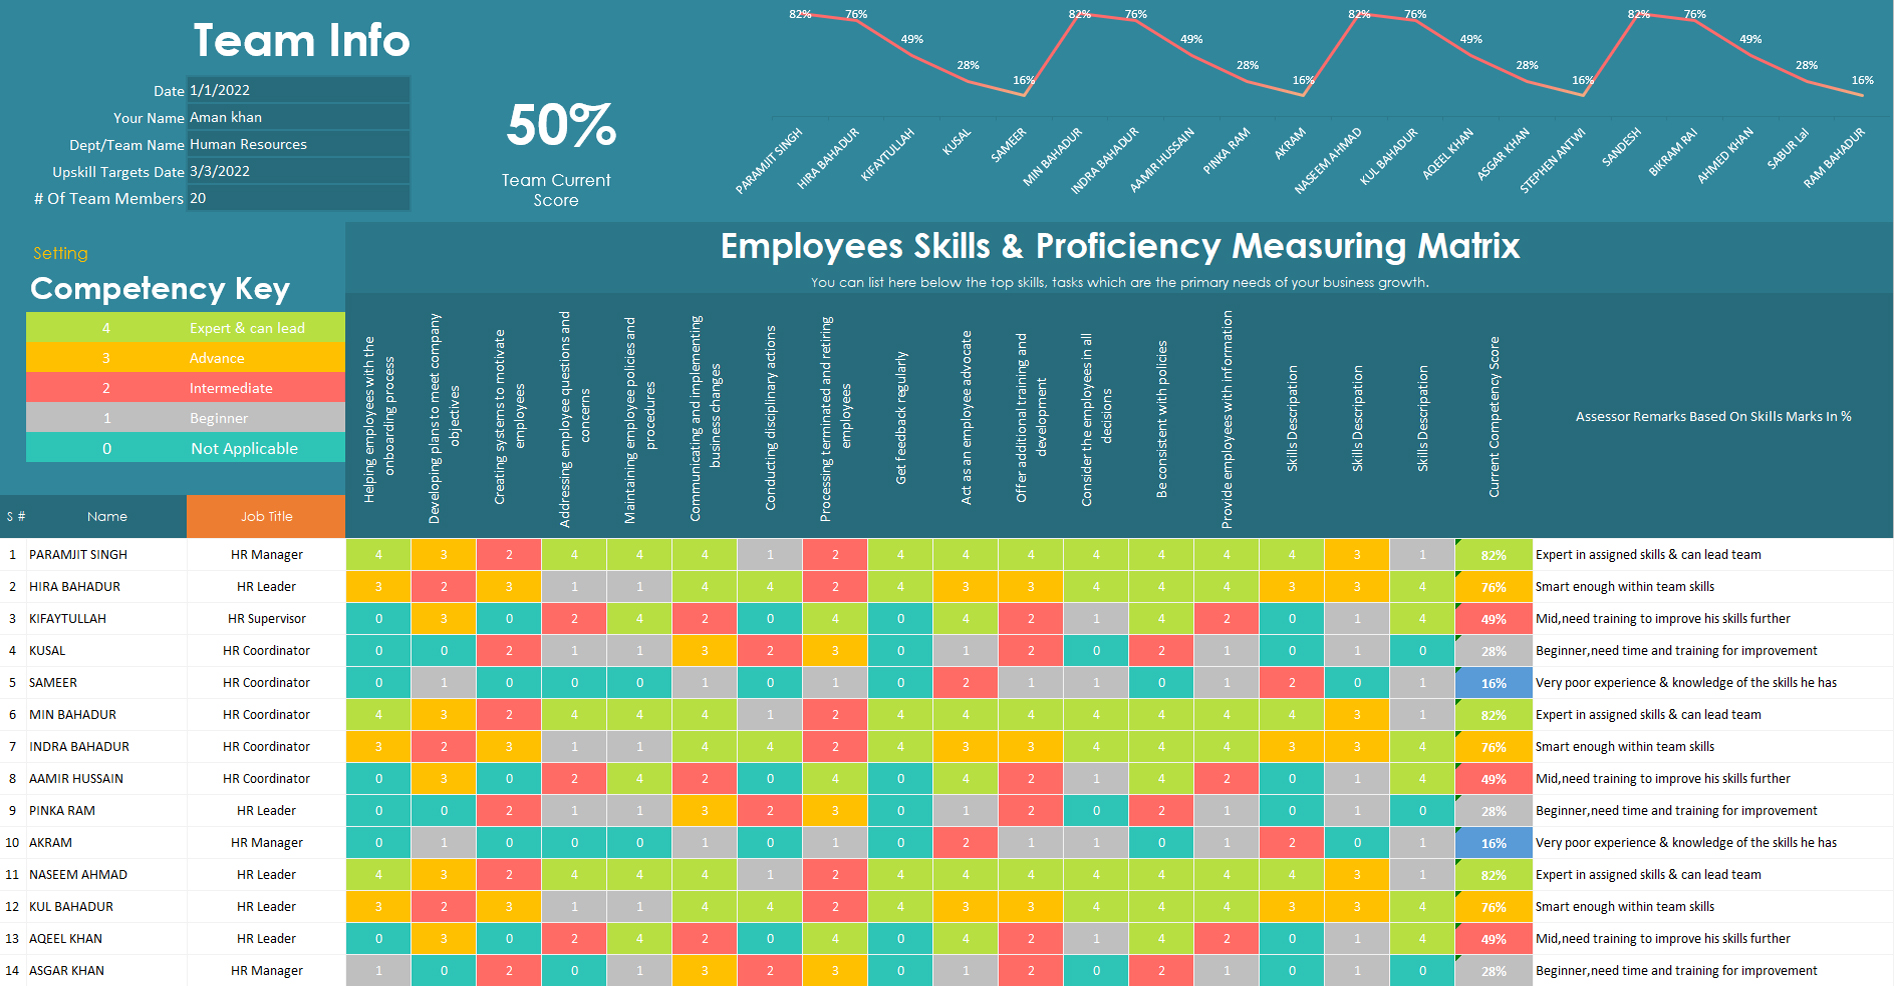 Employees Skills & Proficiency Measuring Matrix